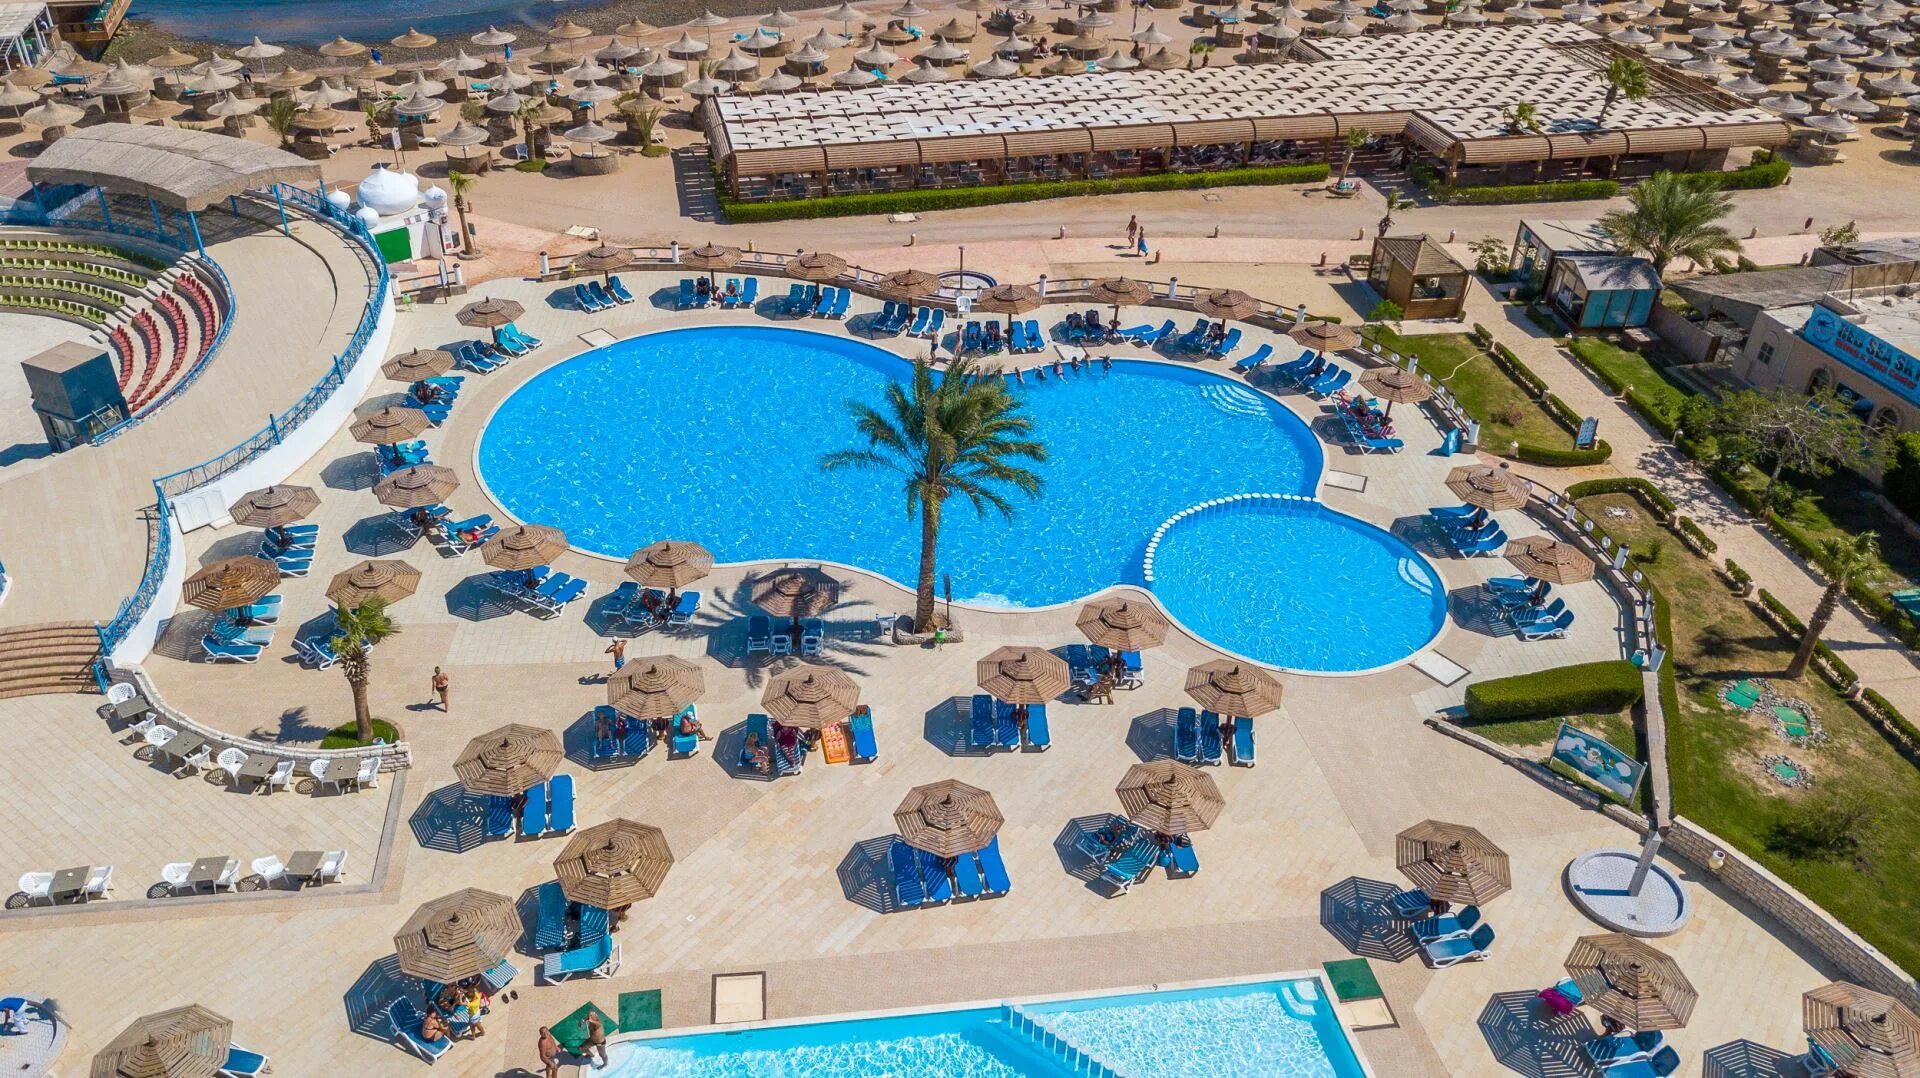 Aladdin hurghada 4. Отель алладин Хургада Египет. Aladdin Beach Resort Hurghada 4 Хургада. Египет алладин Бич Резорт 4. Египет отель алладин 4 Хургада.